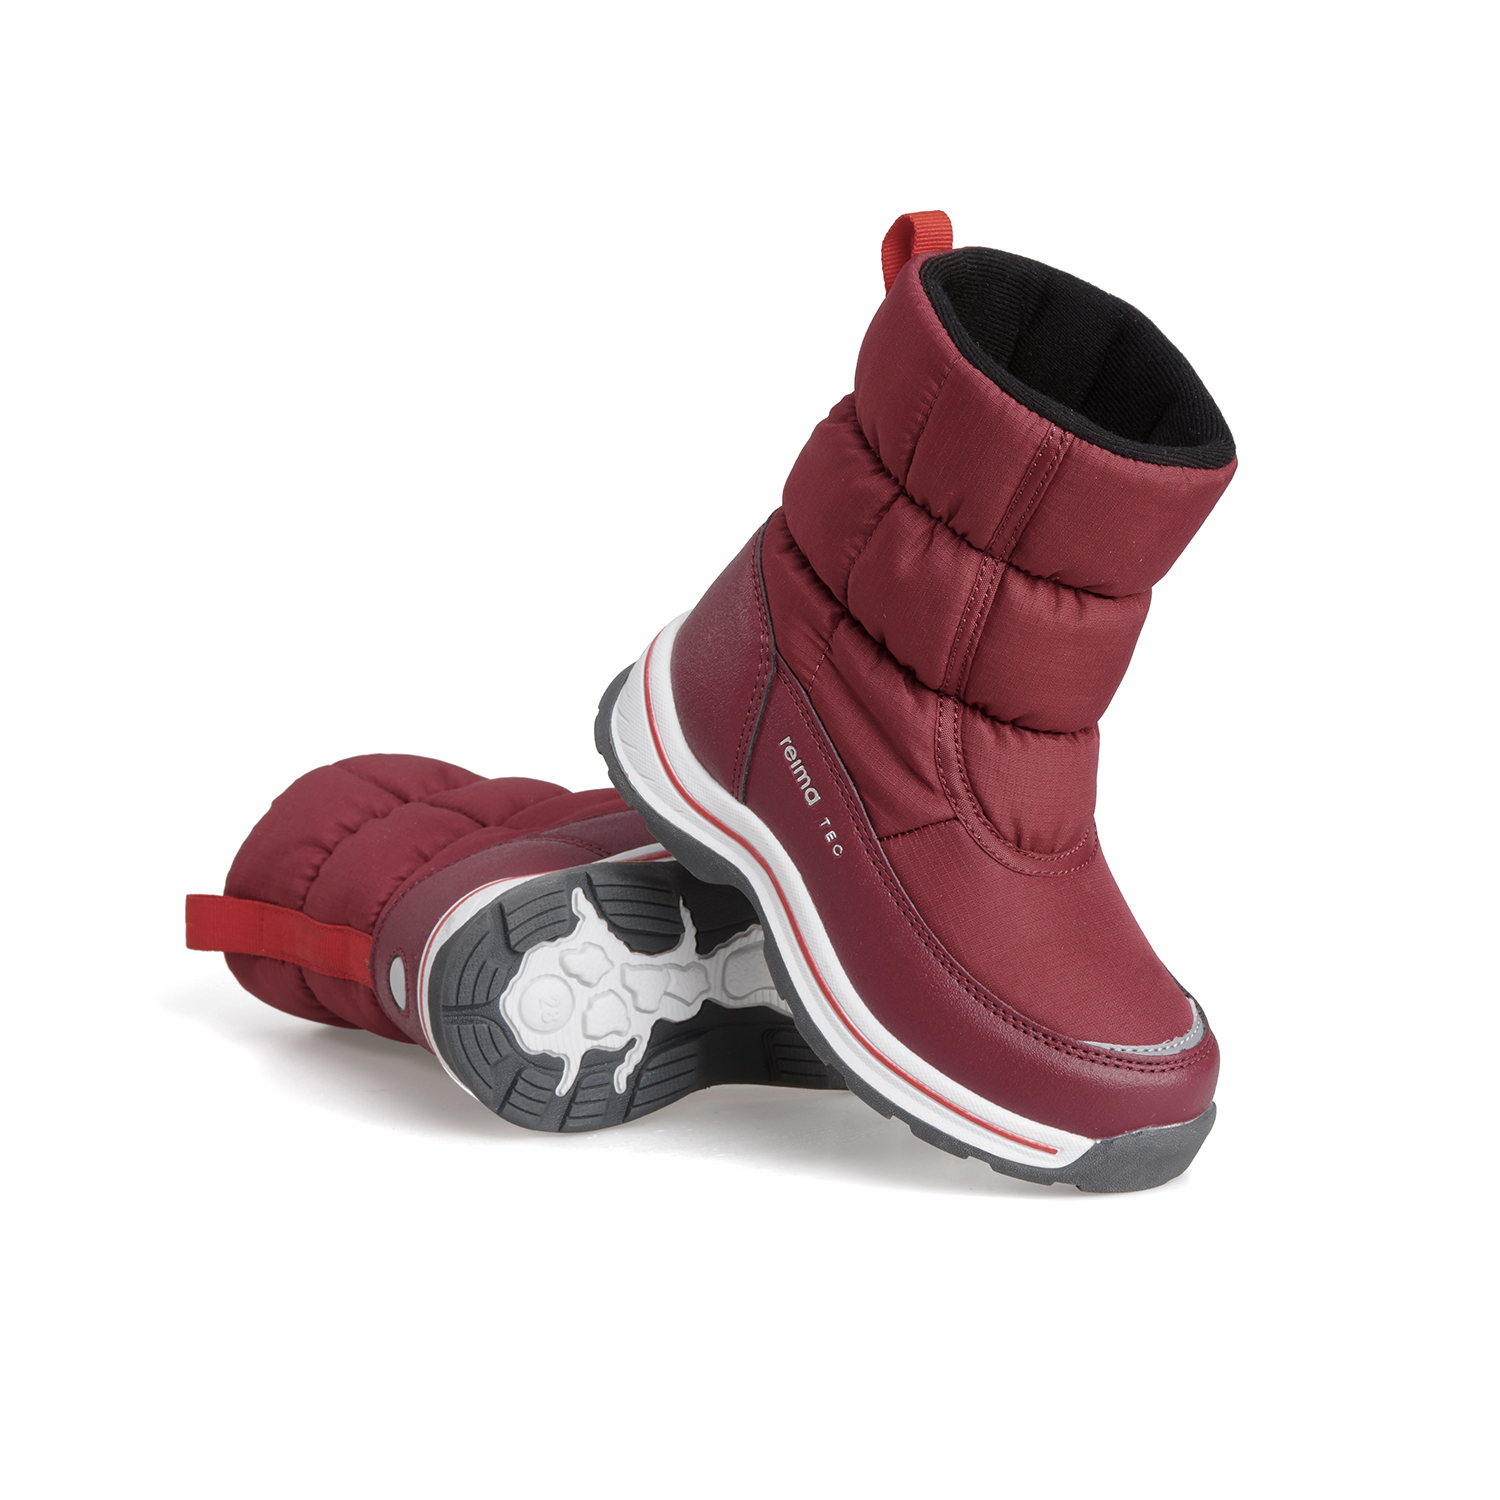 Zimowe buty dla dziecka Reima Pikavari jam red - 26